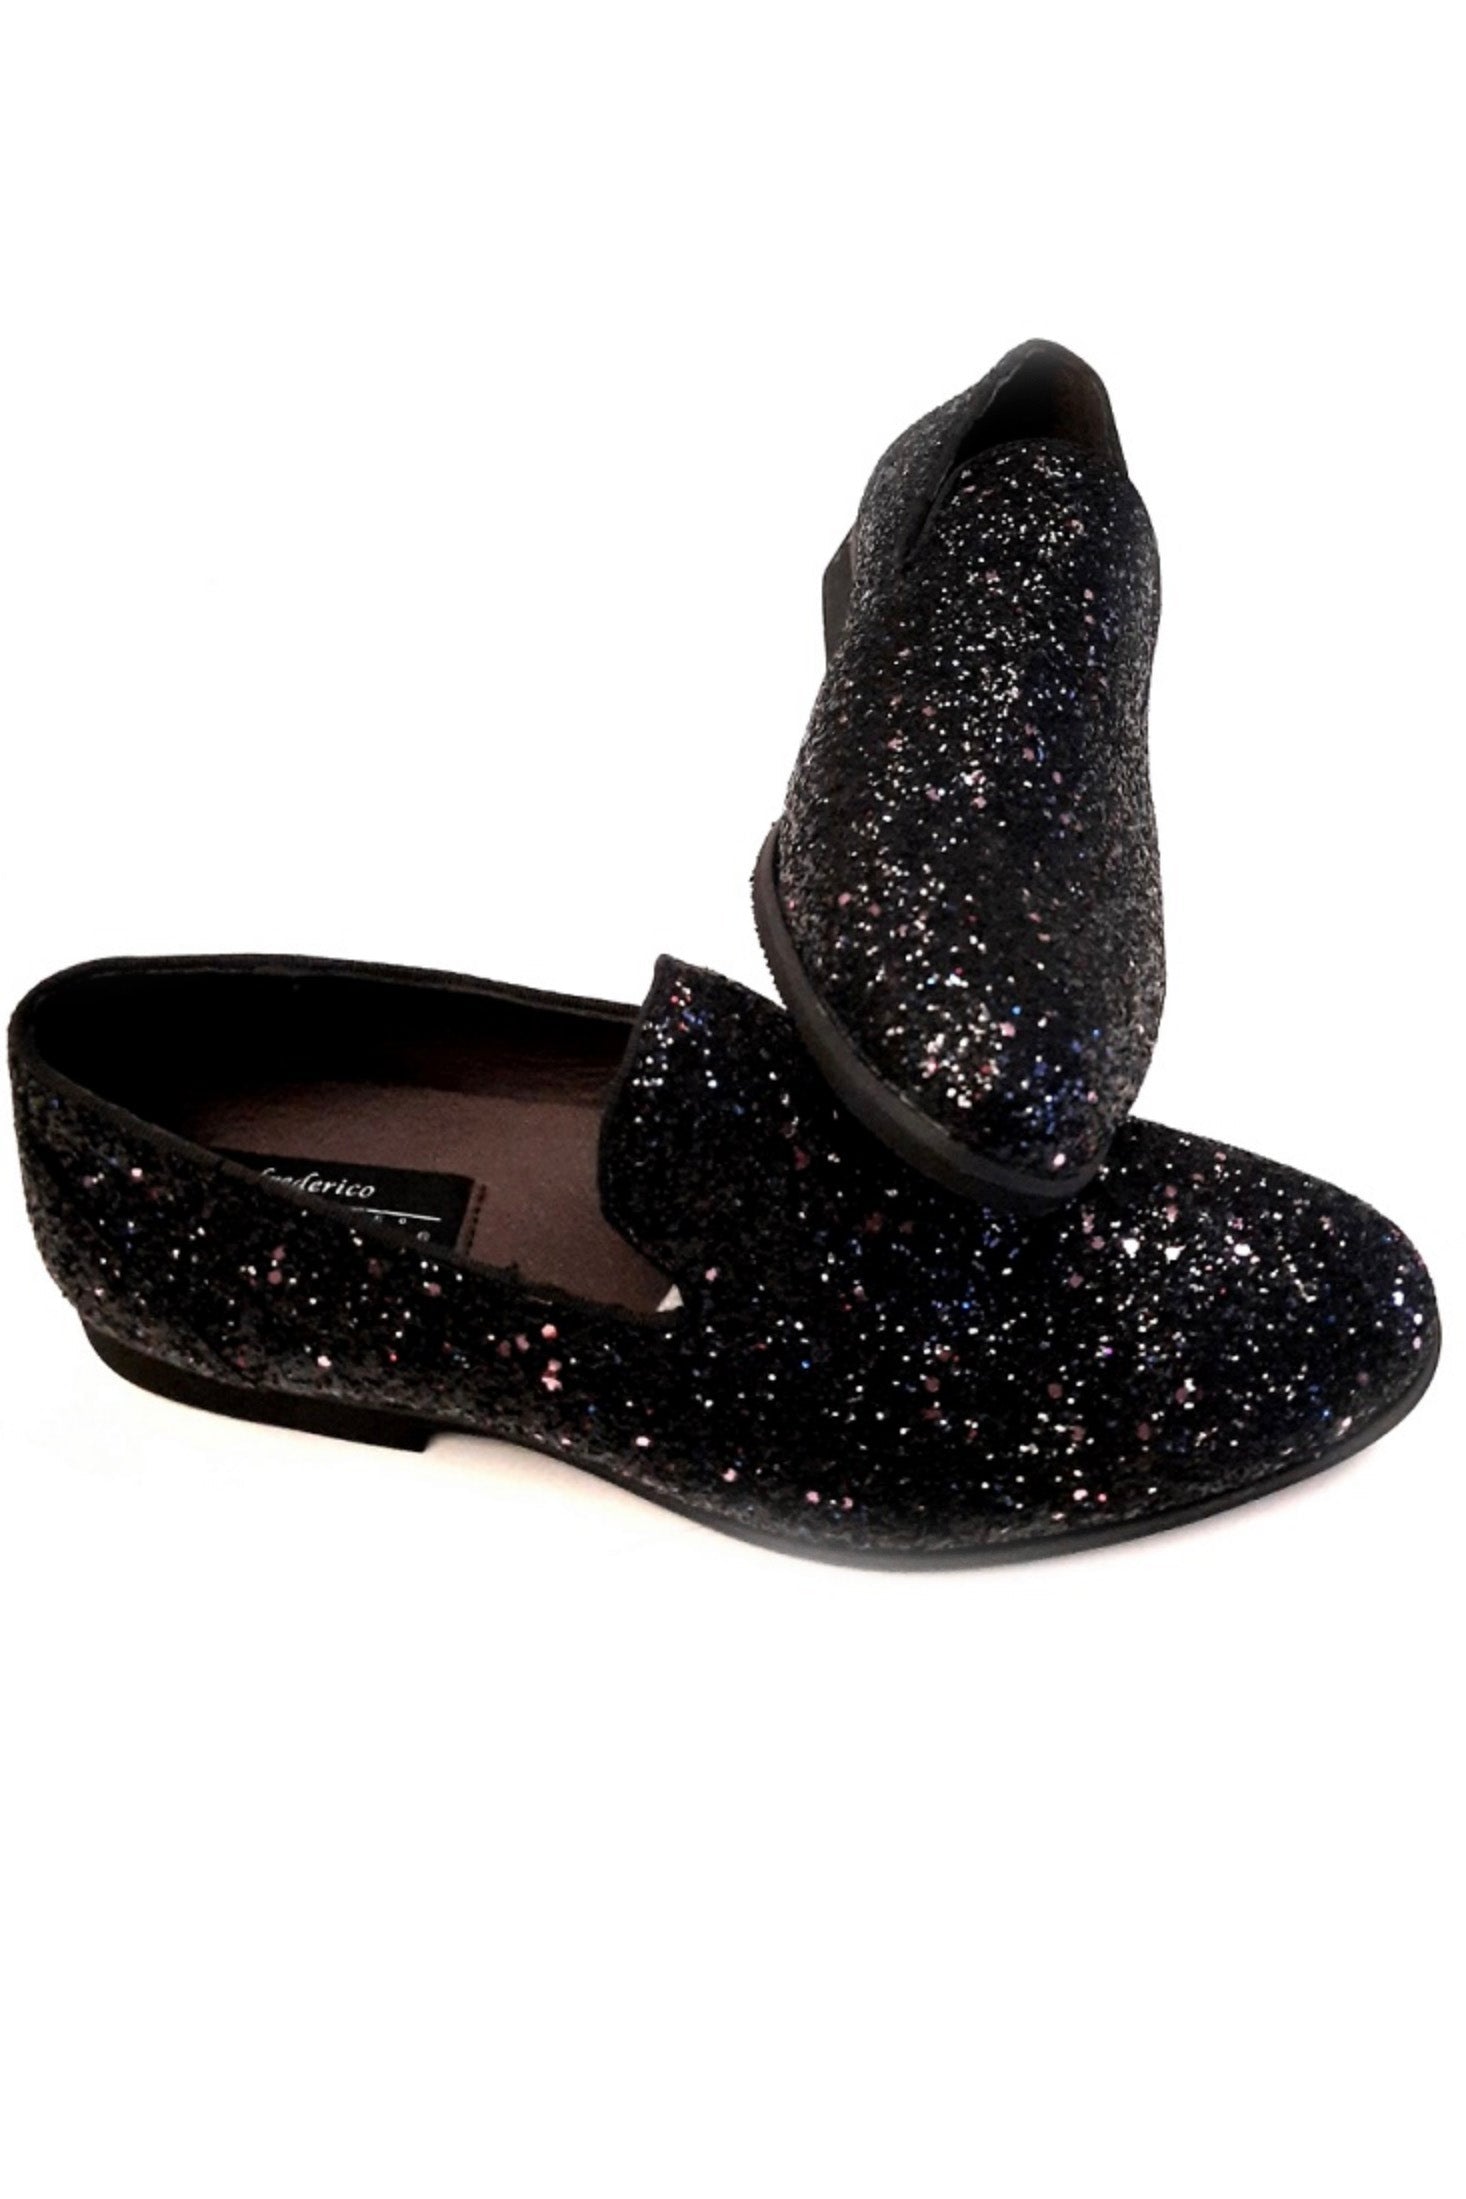 Frederico Leone "Sparkle" Marble Black Shoes